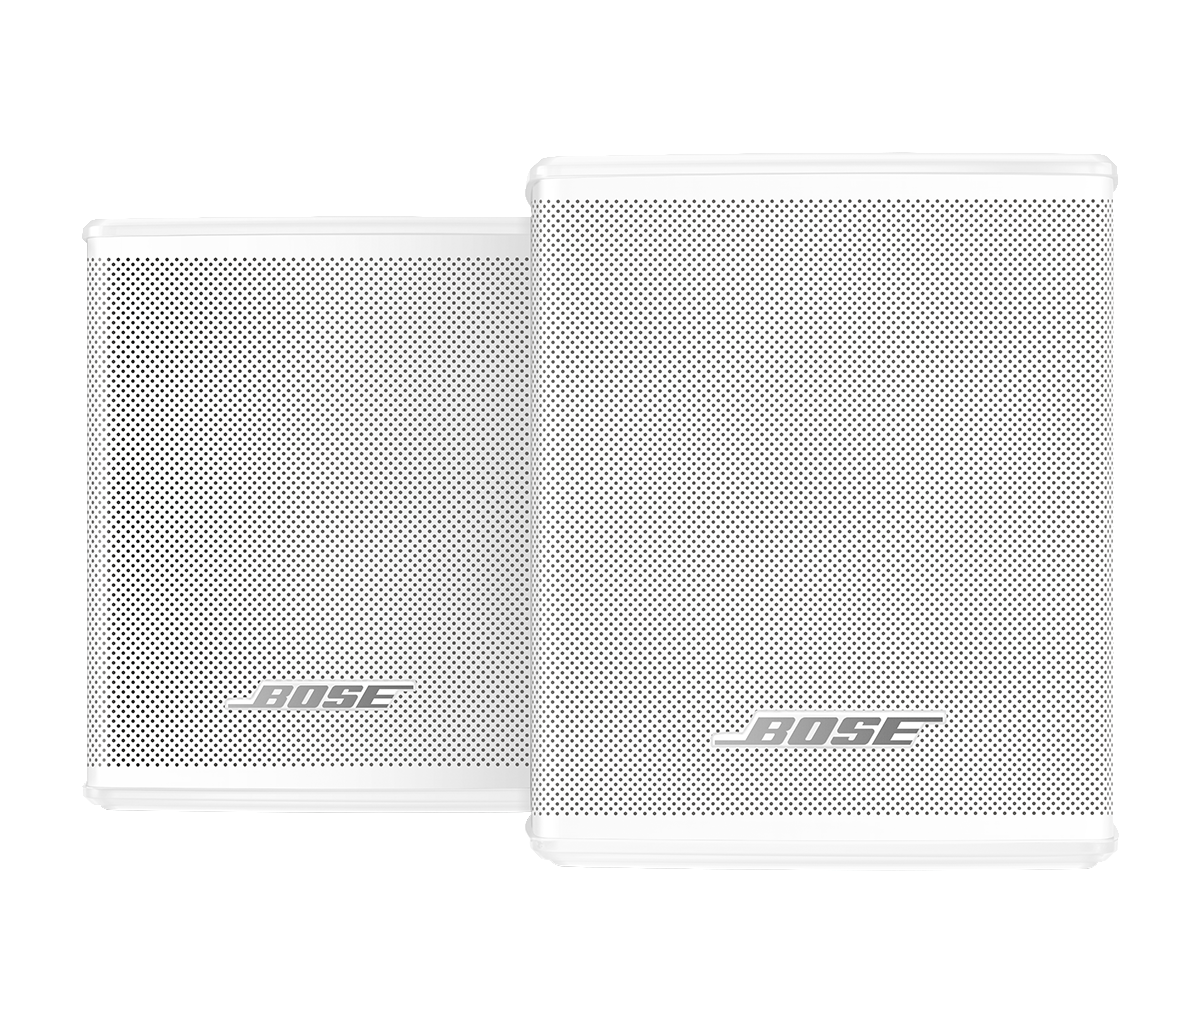 Bose Surround Speakers – Refurbished Arctic White